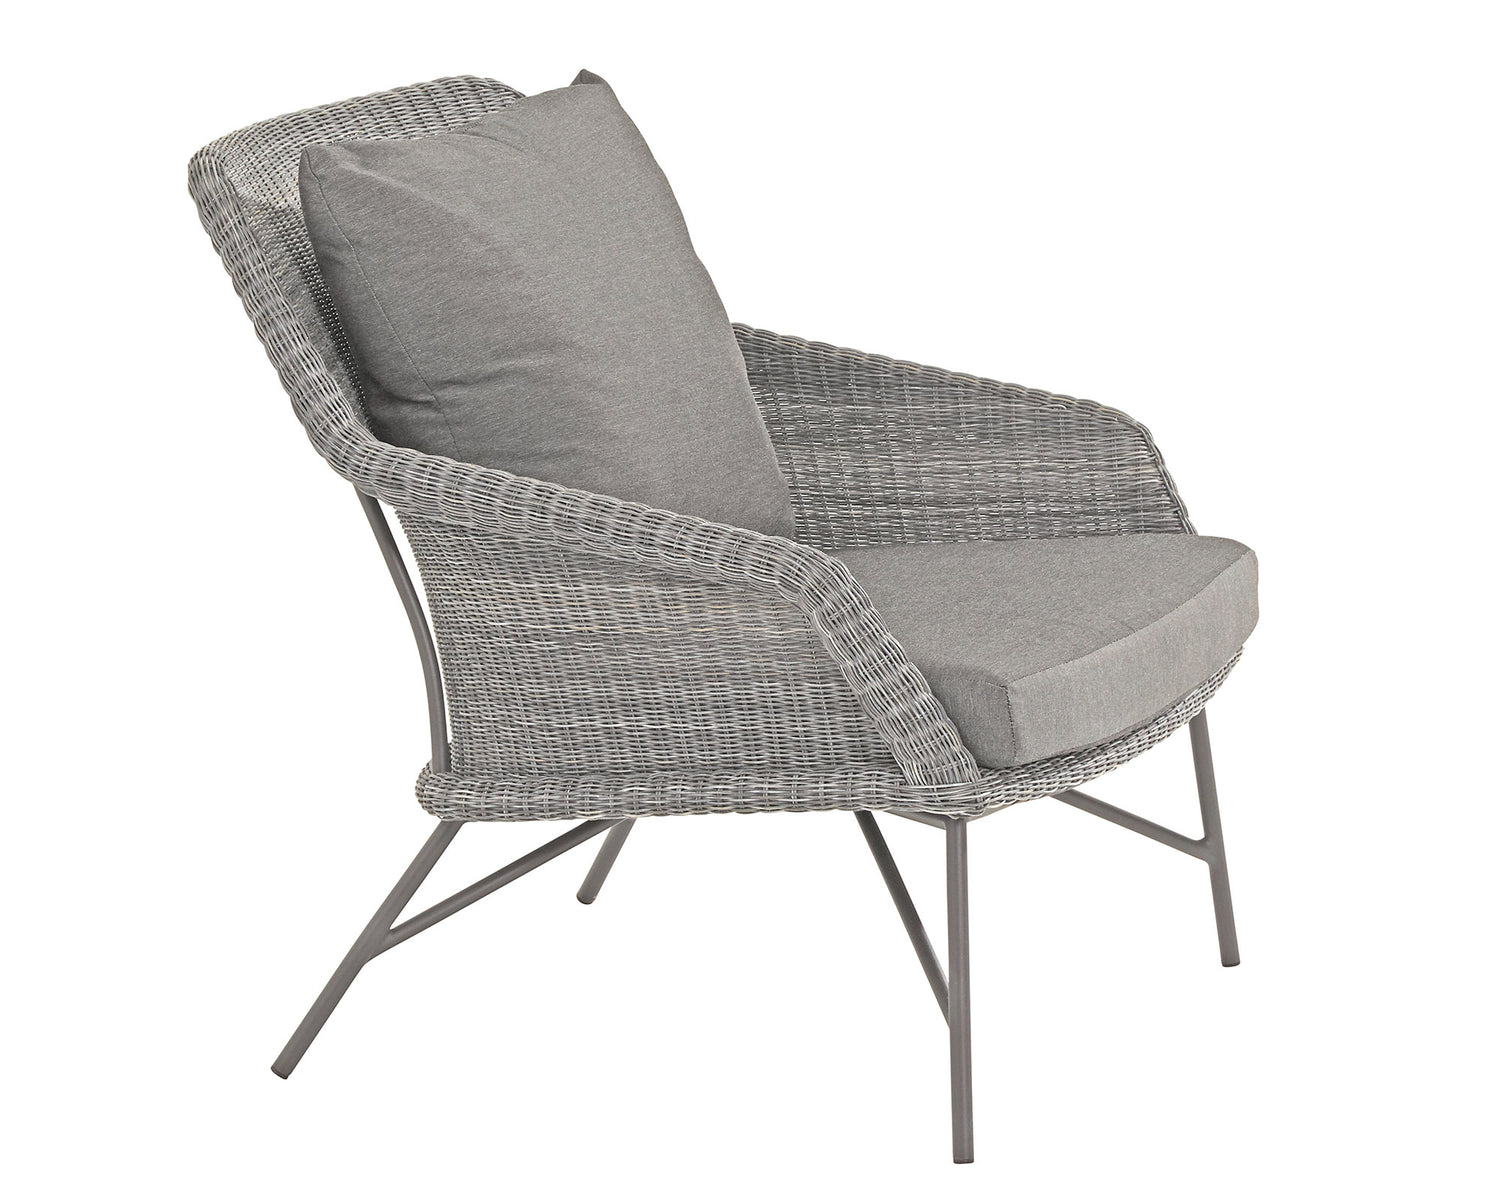 213527_-Samoa-living-chair-Ecoloom-Charcoal-2-cush-04-mine.jpg